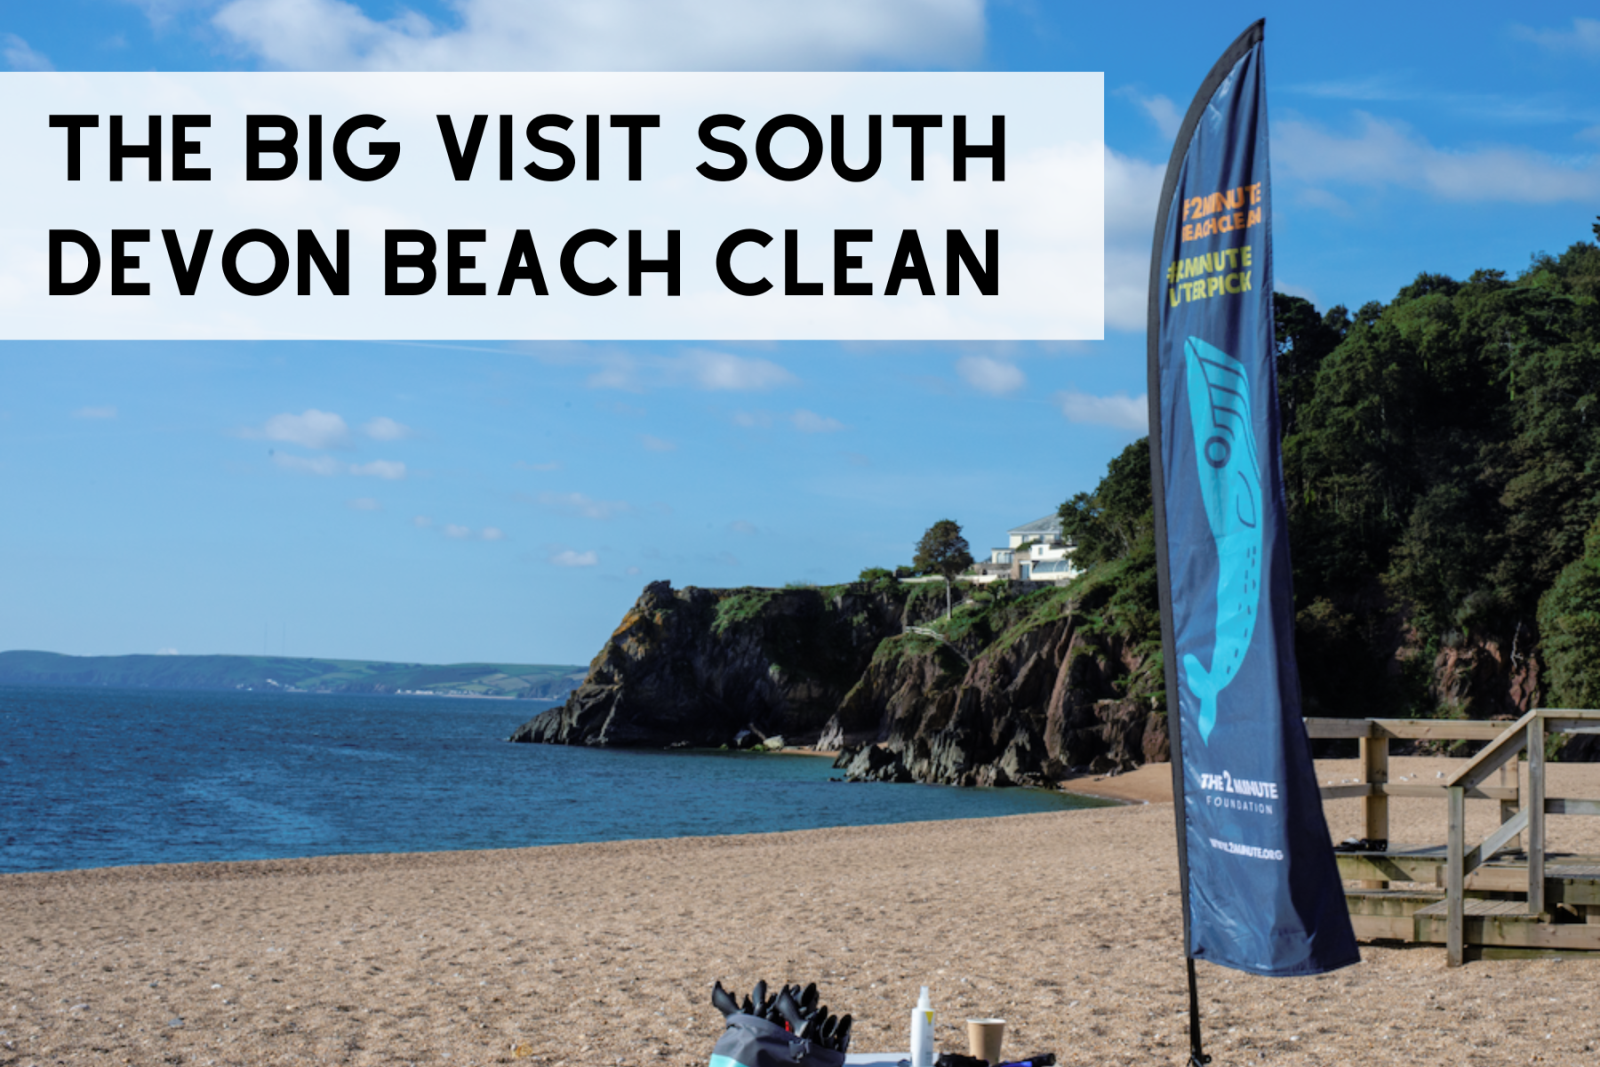 The Big Visit South Devon Beach Clean